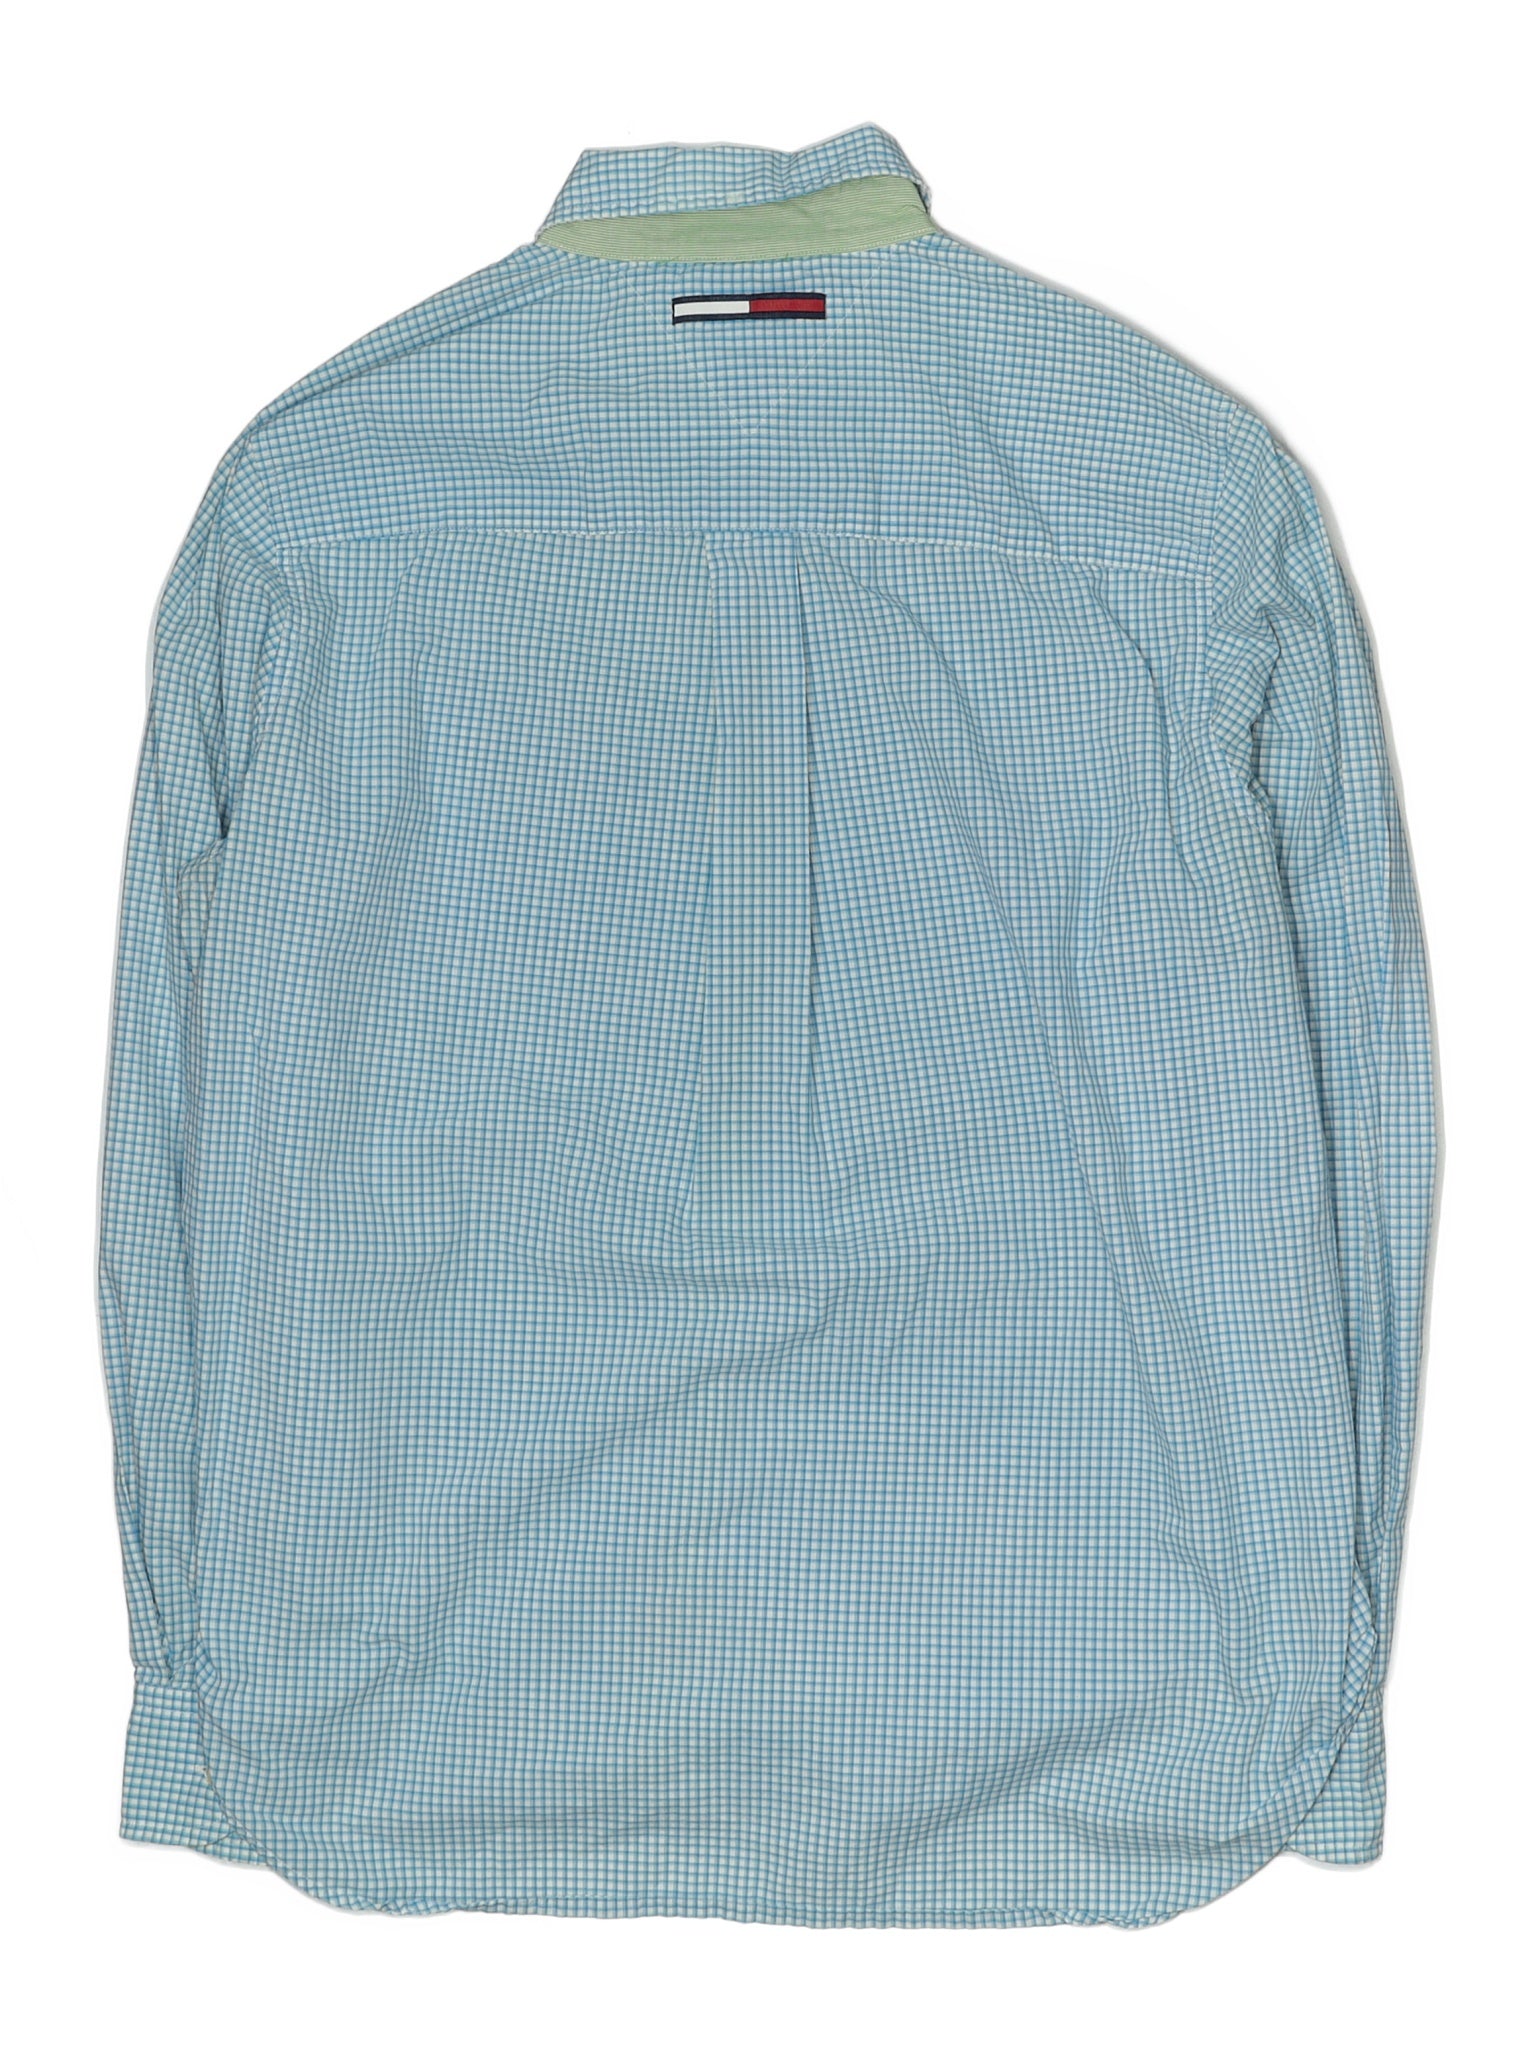 Long Sleeve Button Down Shirt size - 10